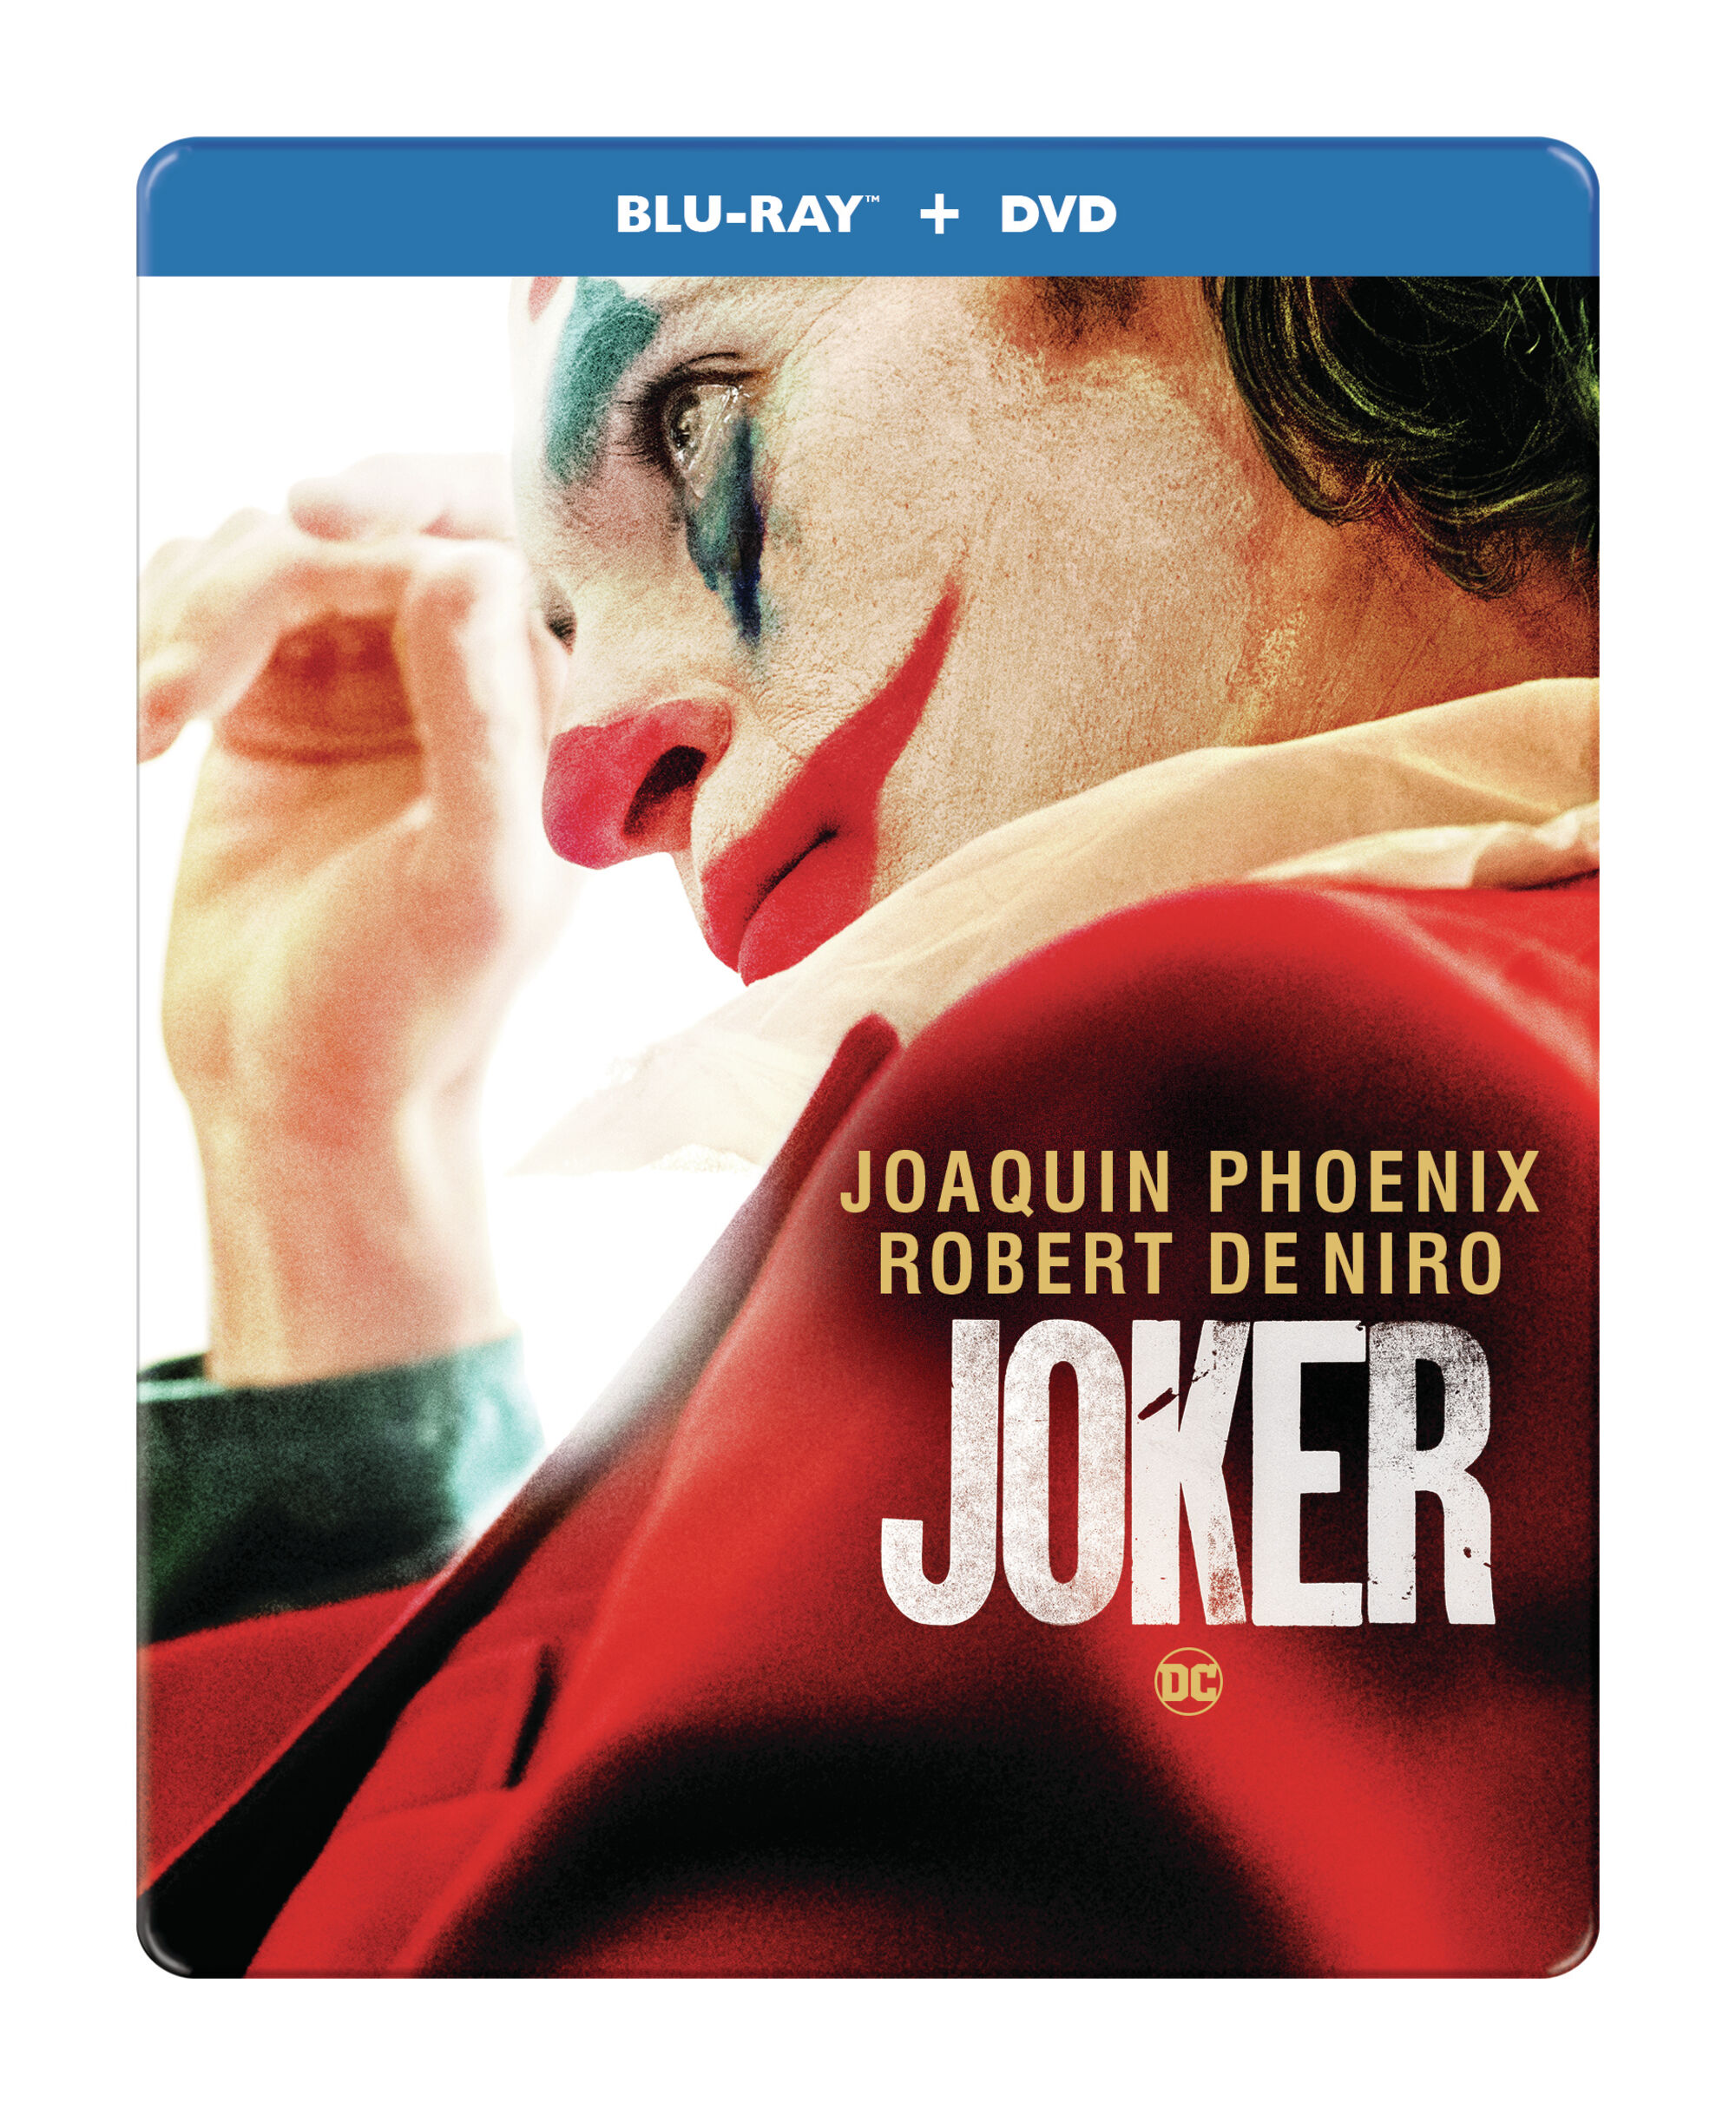 Joker (with DVD Steelbook) - Blu-ray [ 2019 ]  - Drama Movies On Blu-ray - Movies On GRUV